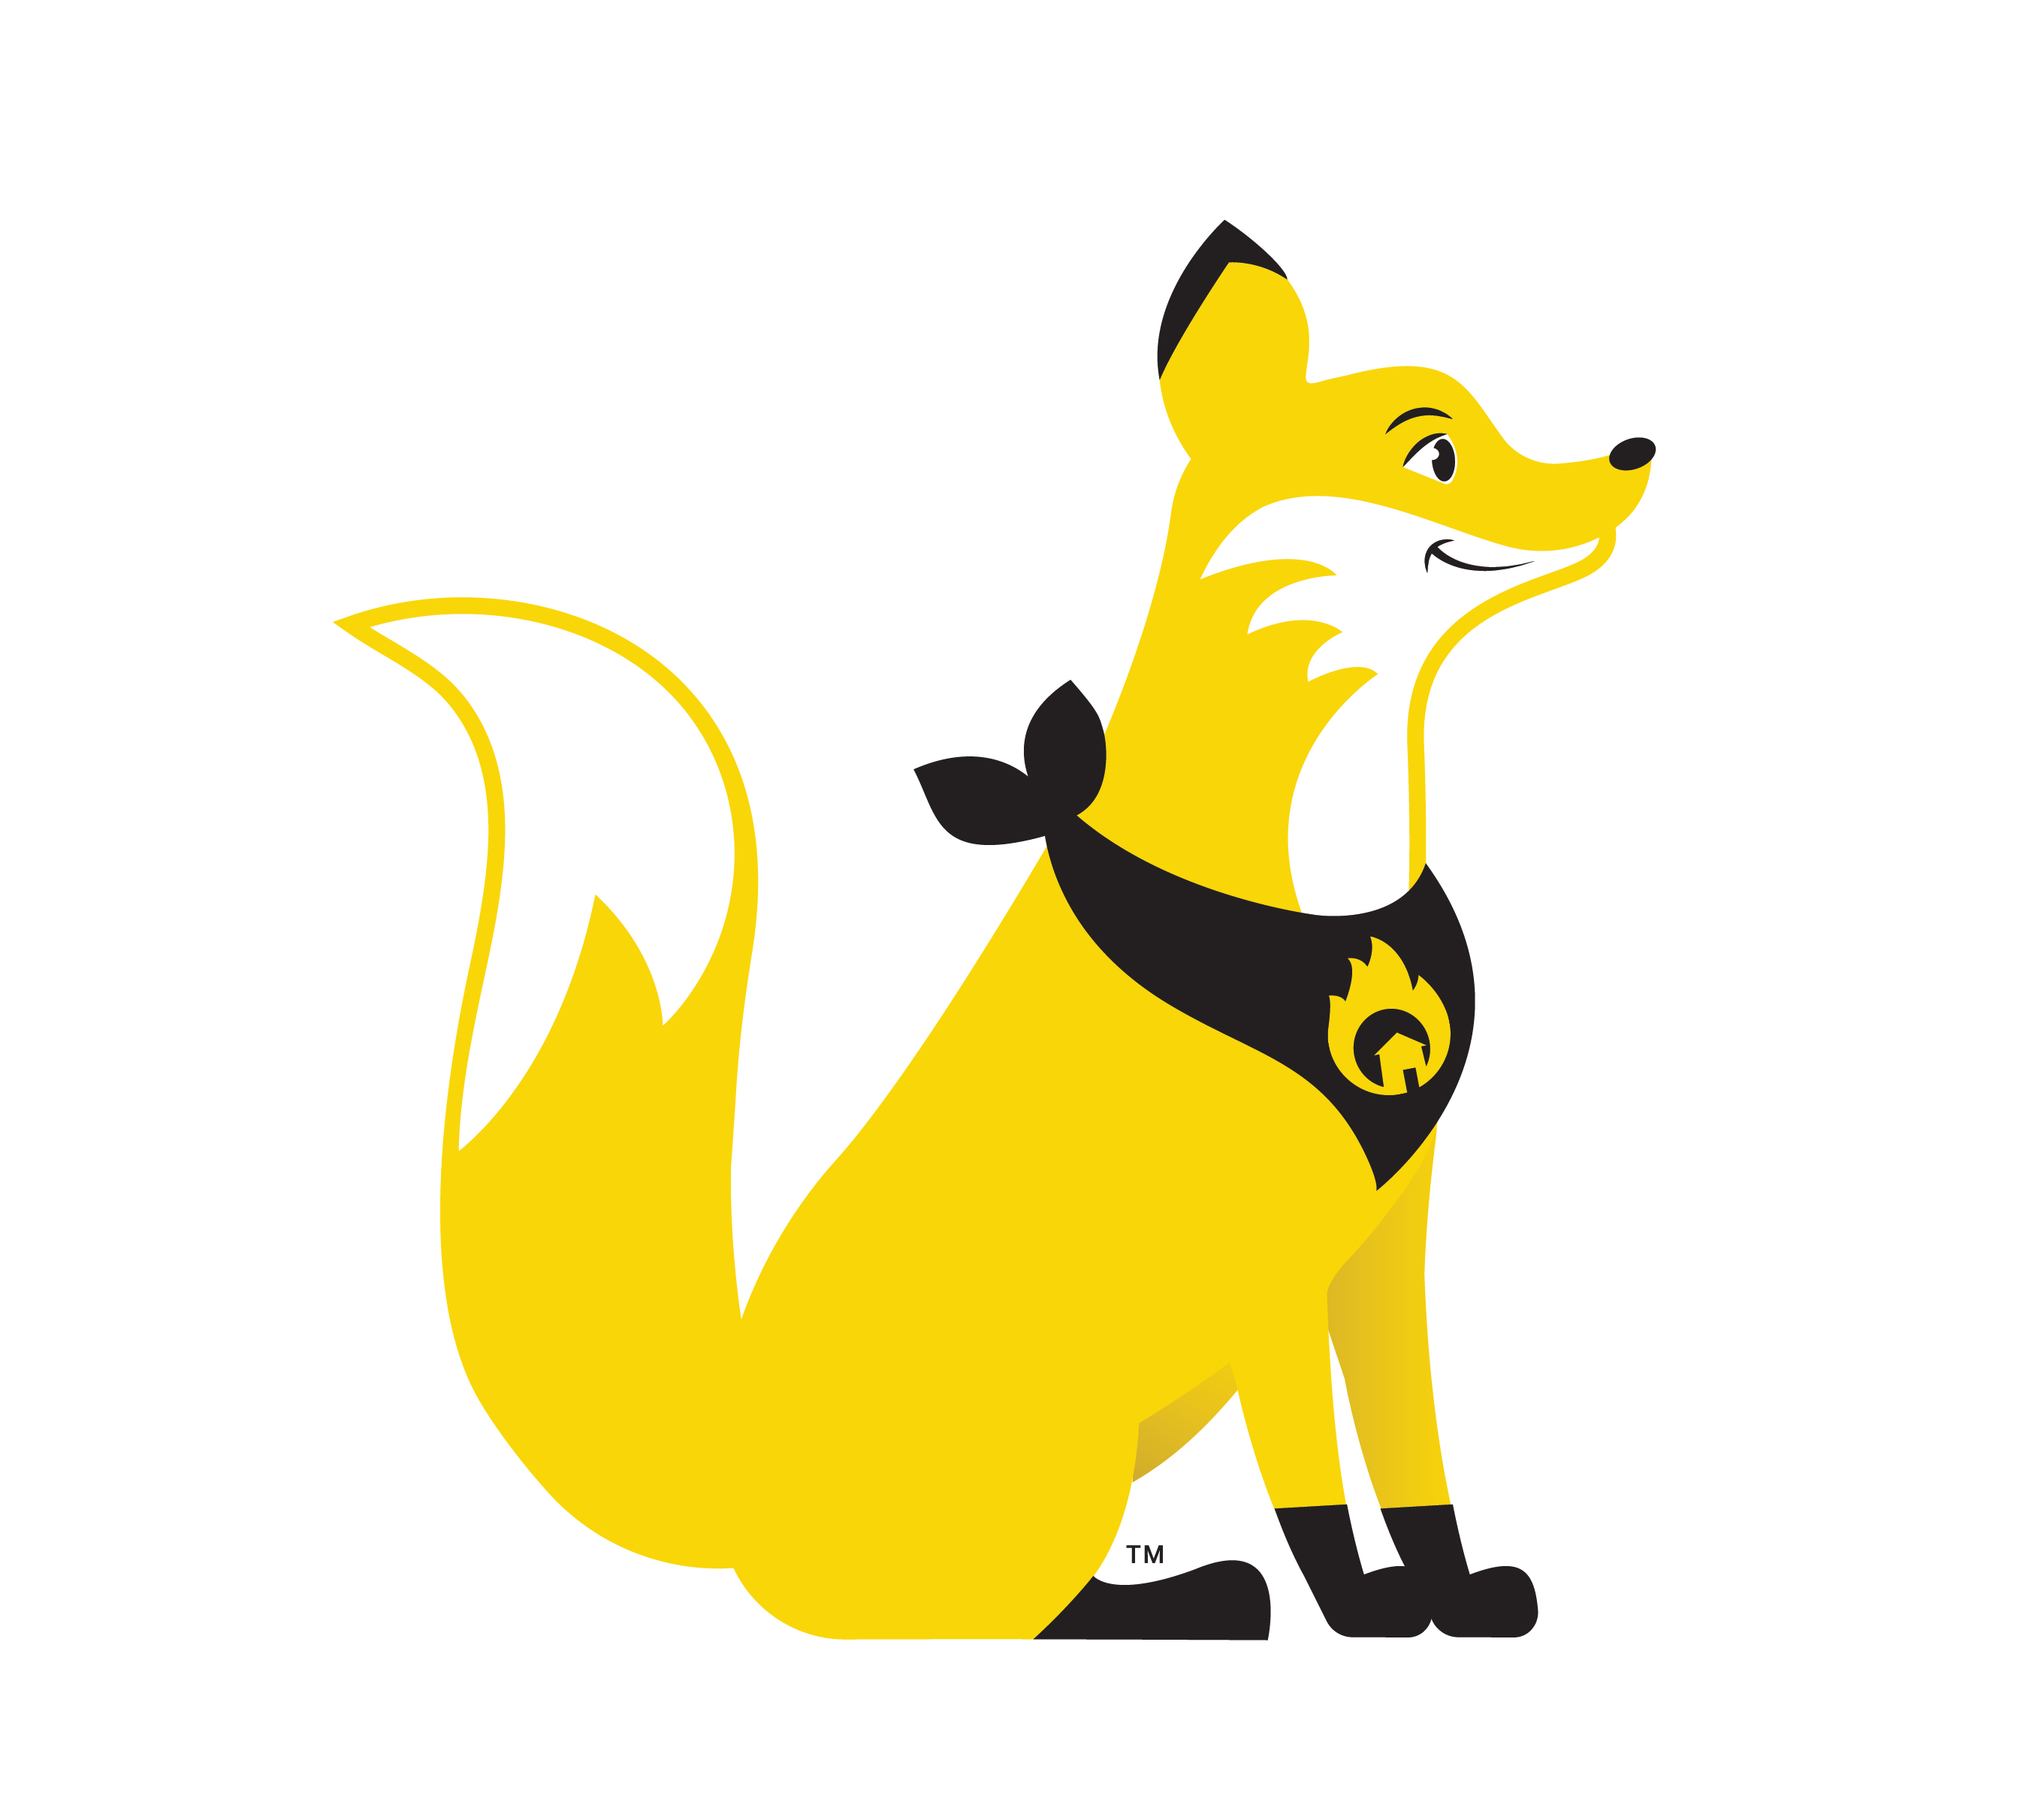 FireSmart B.C. welcomes new mascot Ember the FireSmart Fox